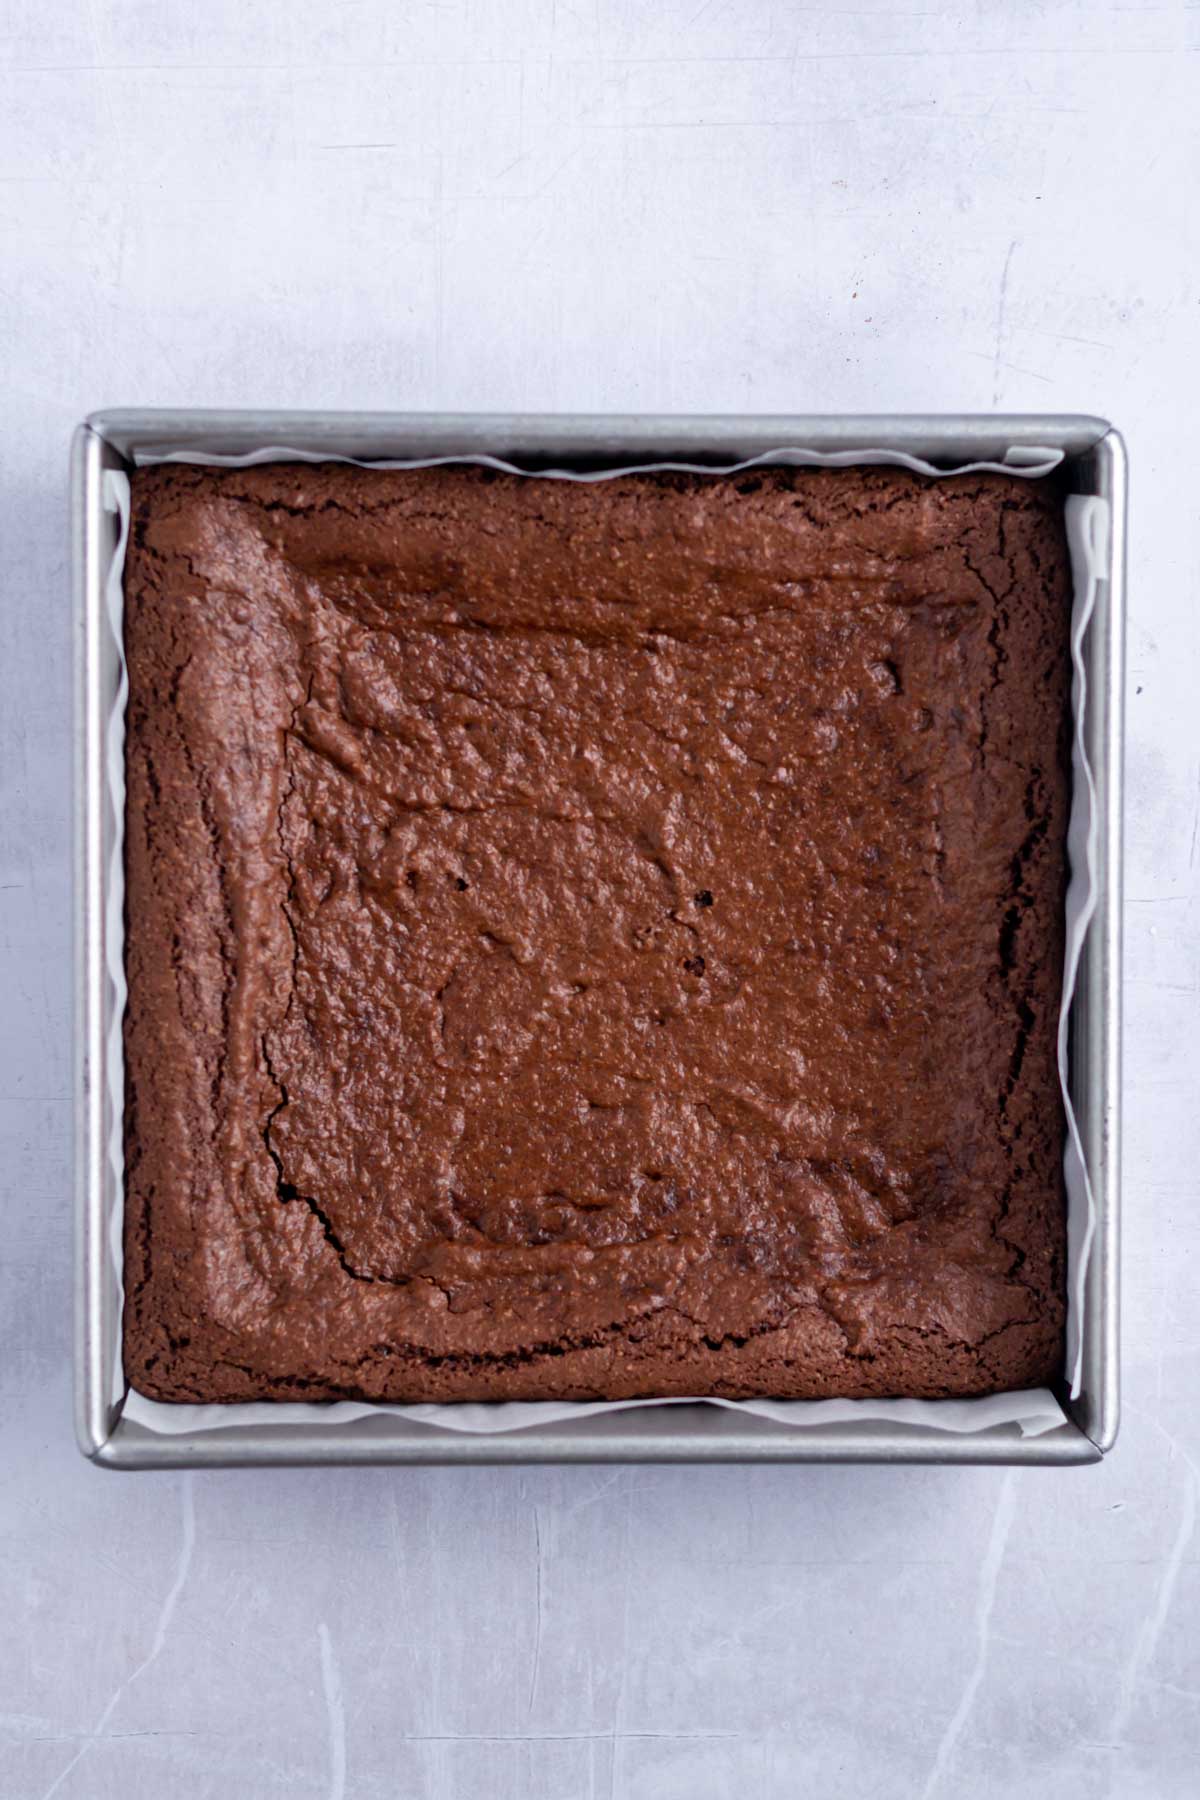 Baked gluten free brownies in a baking pan.